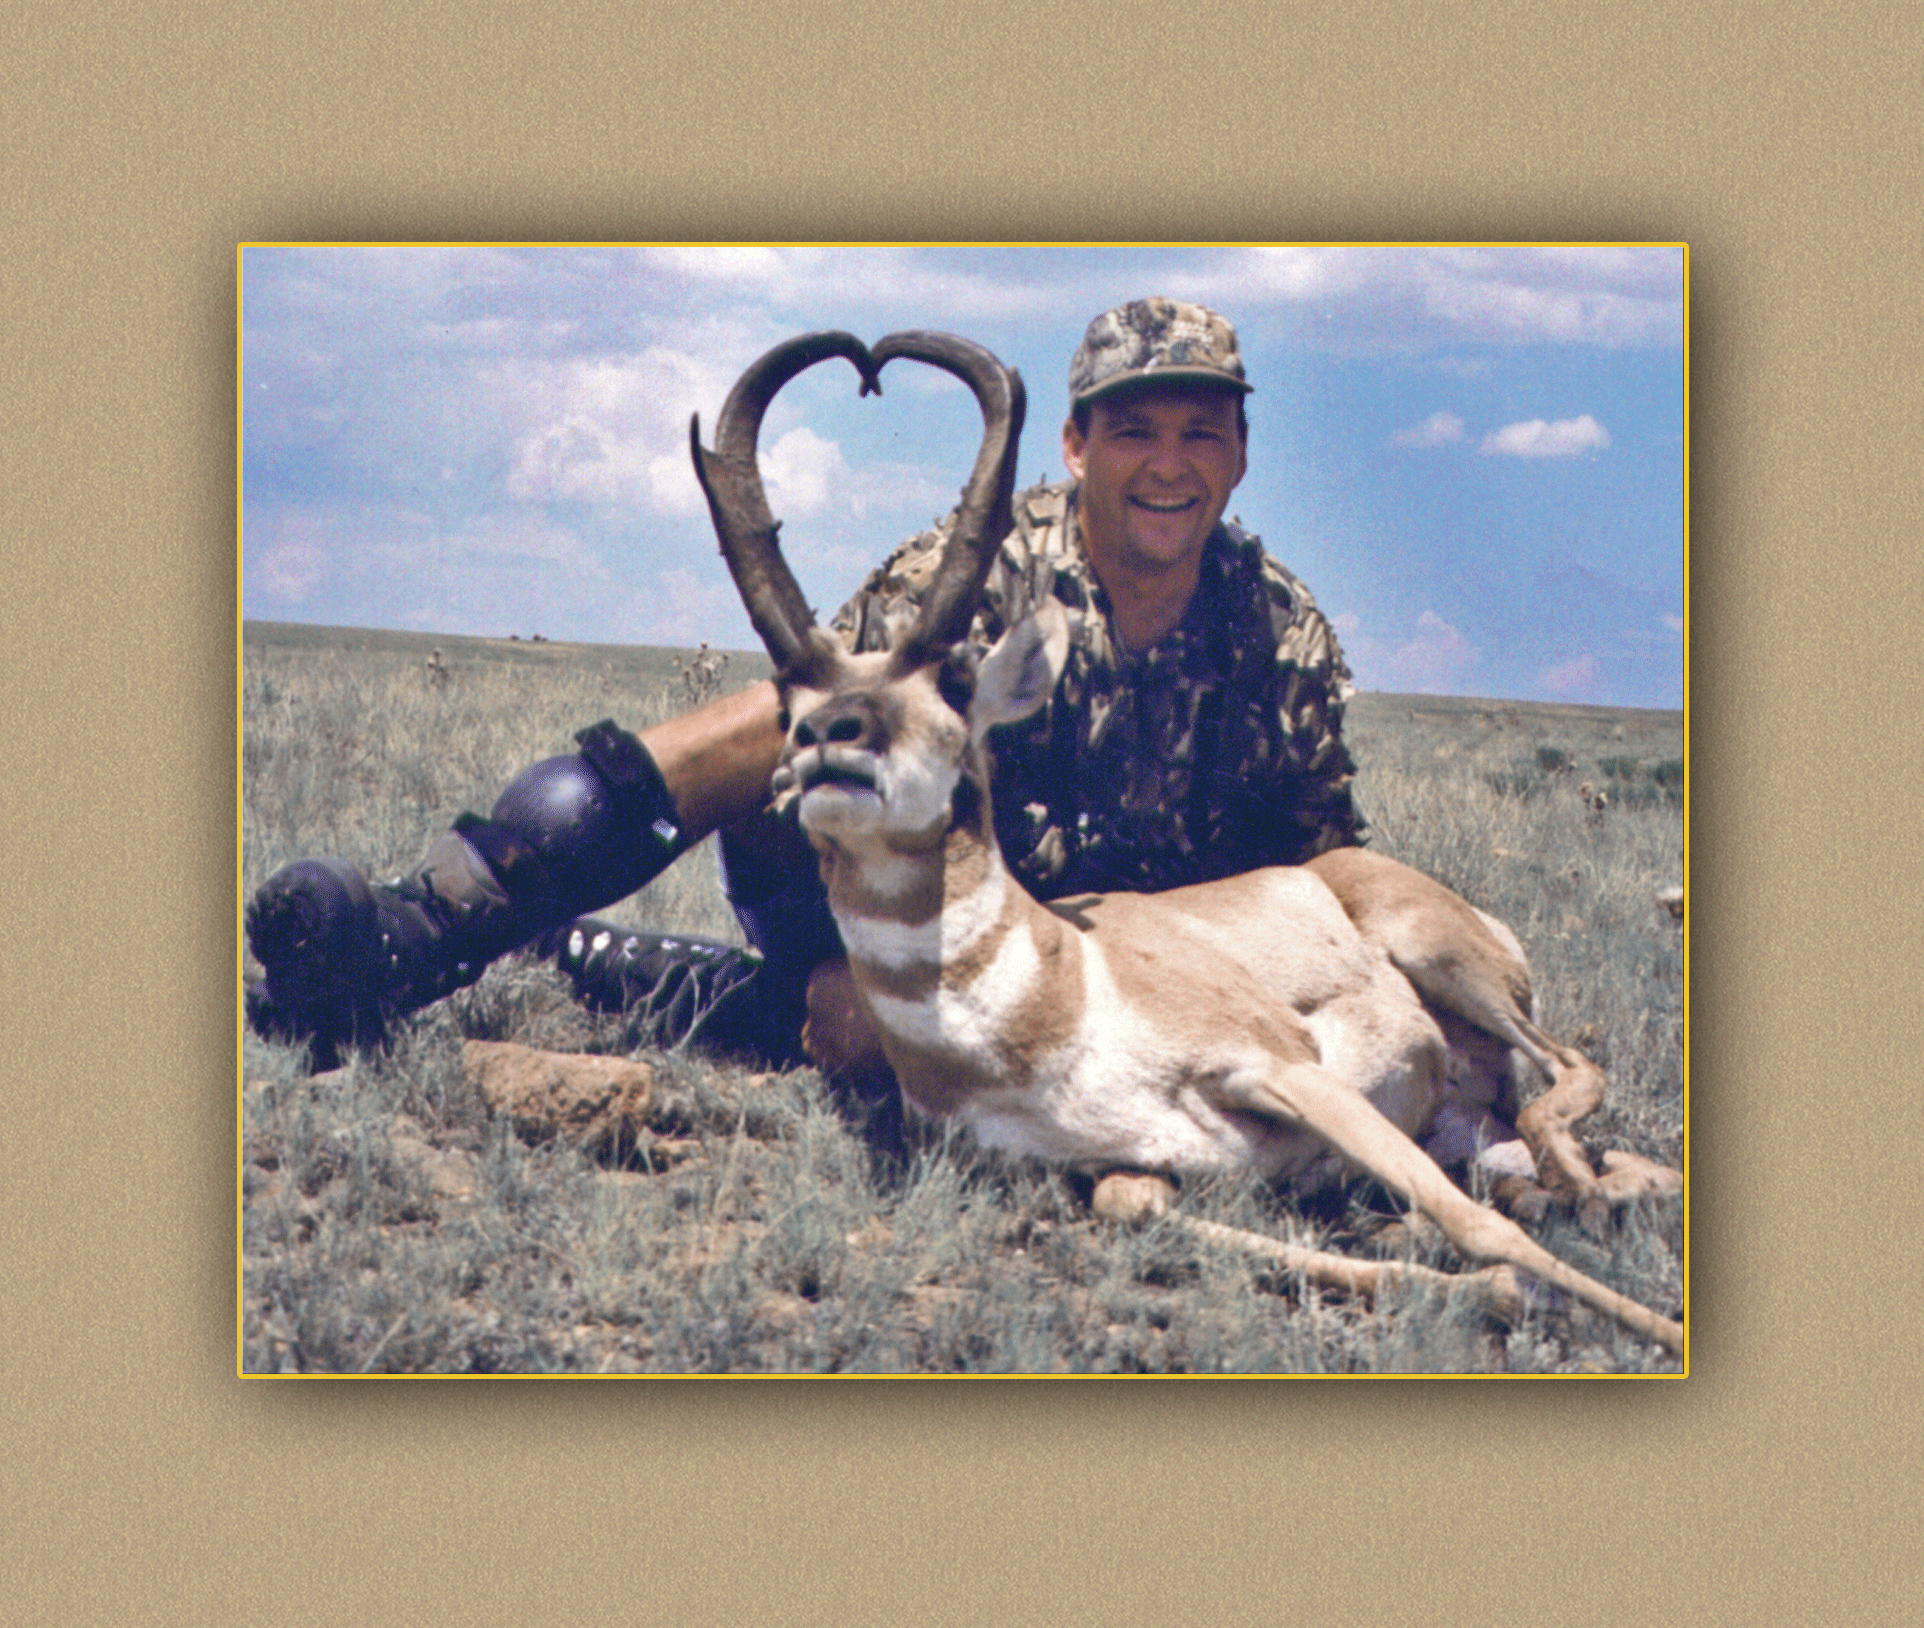 yellowhorn outfitters arizona hunting yellowhorn outfitters arizona bighorn sheep guiding outfitting deer elk antelope photography